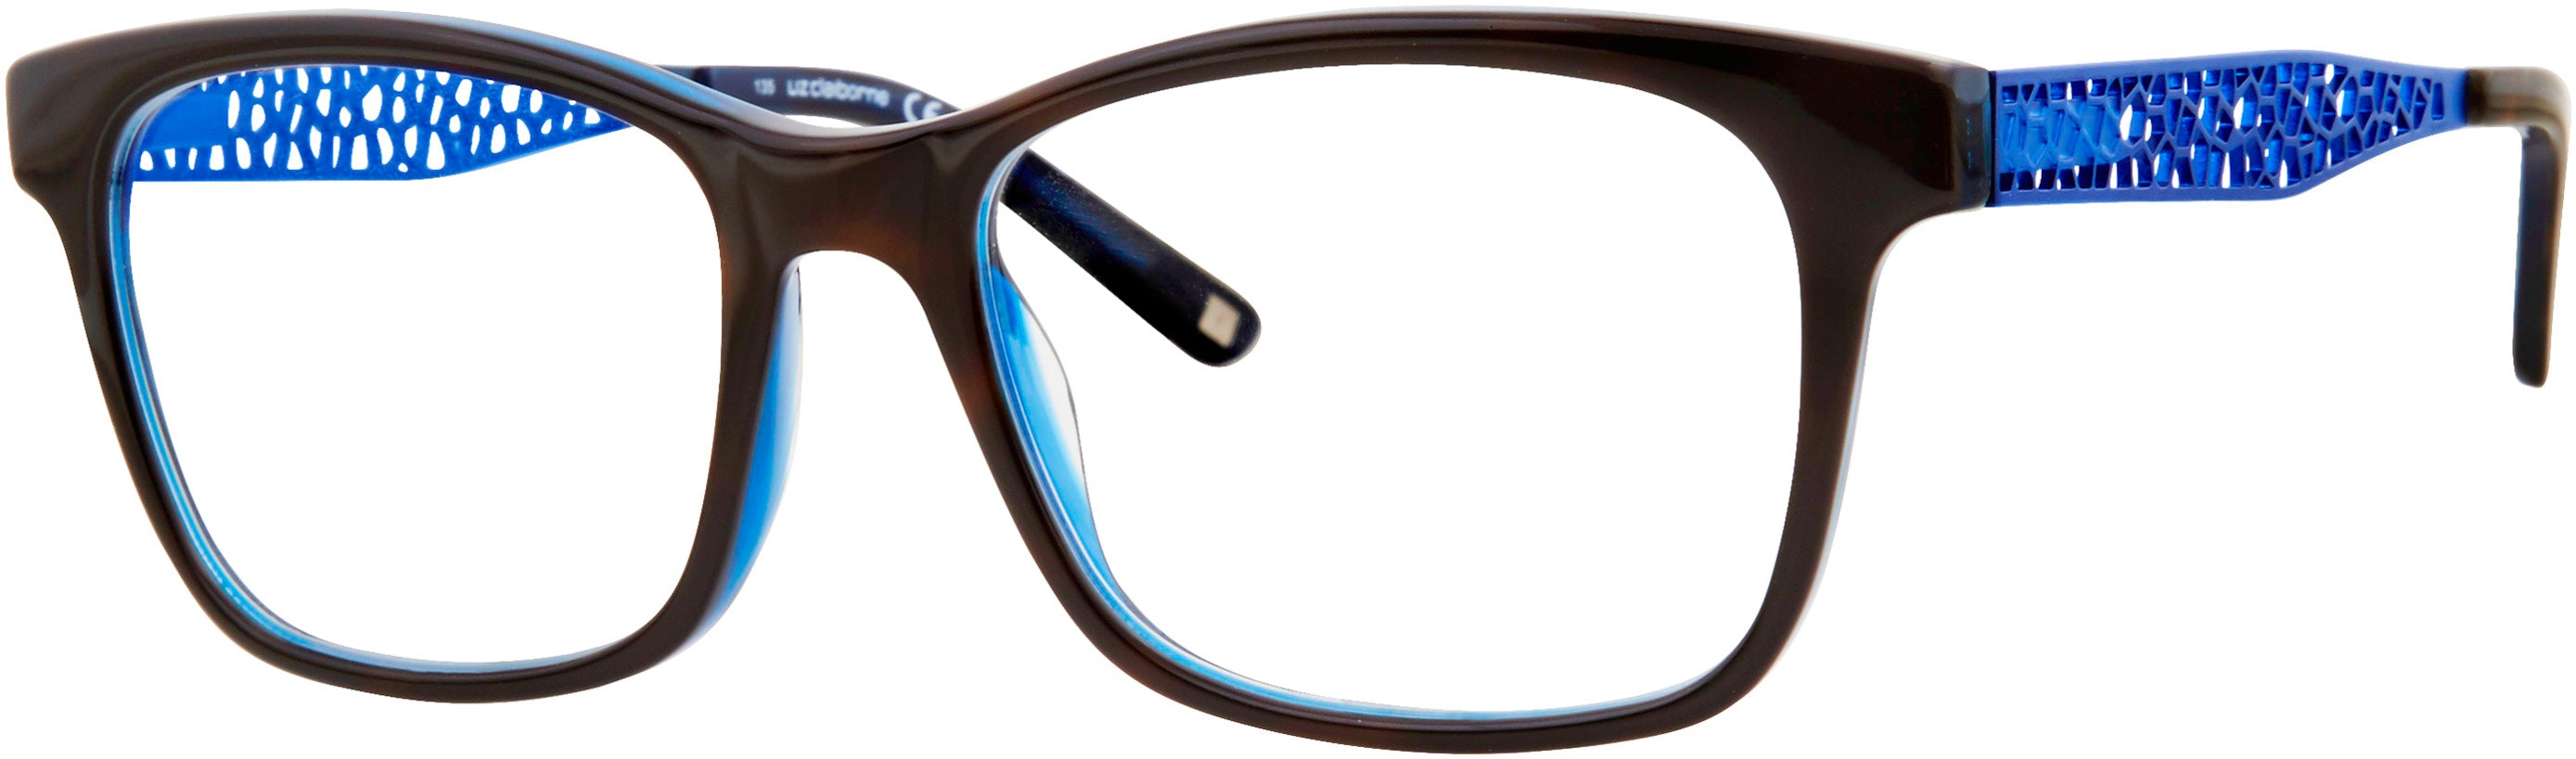  Liz Claiborne 642 Square Eyeglasses 0IPR-0IPR  Havana Blue (00 Demo Lens)